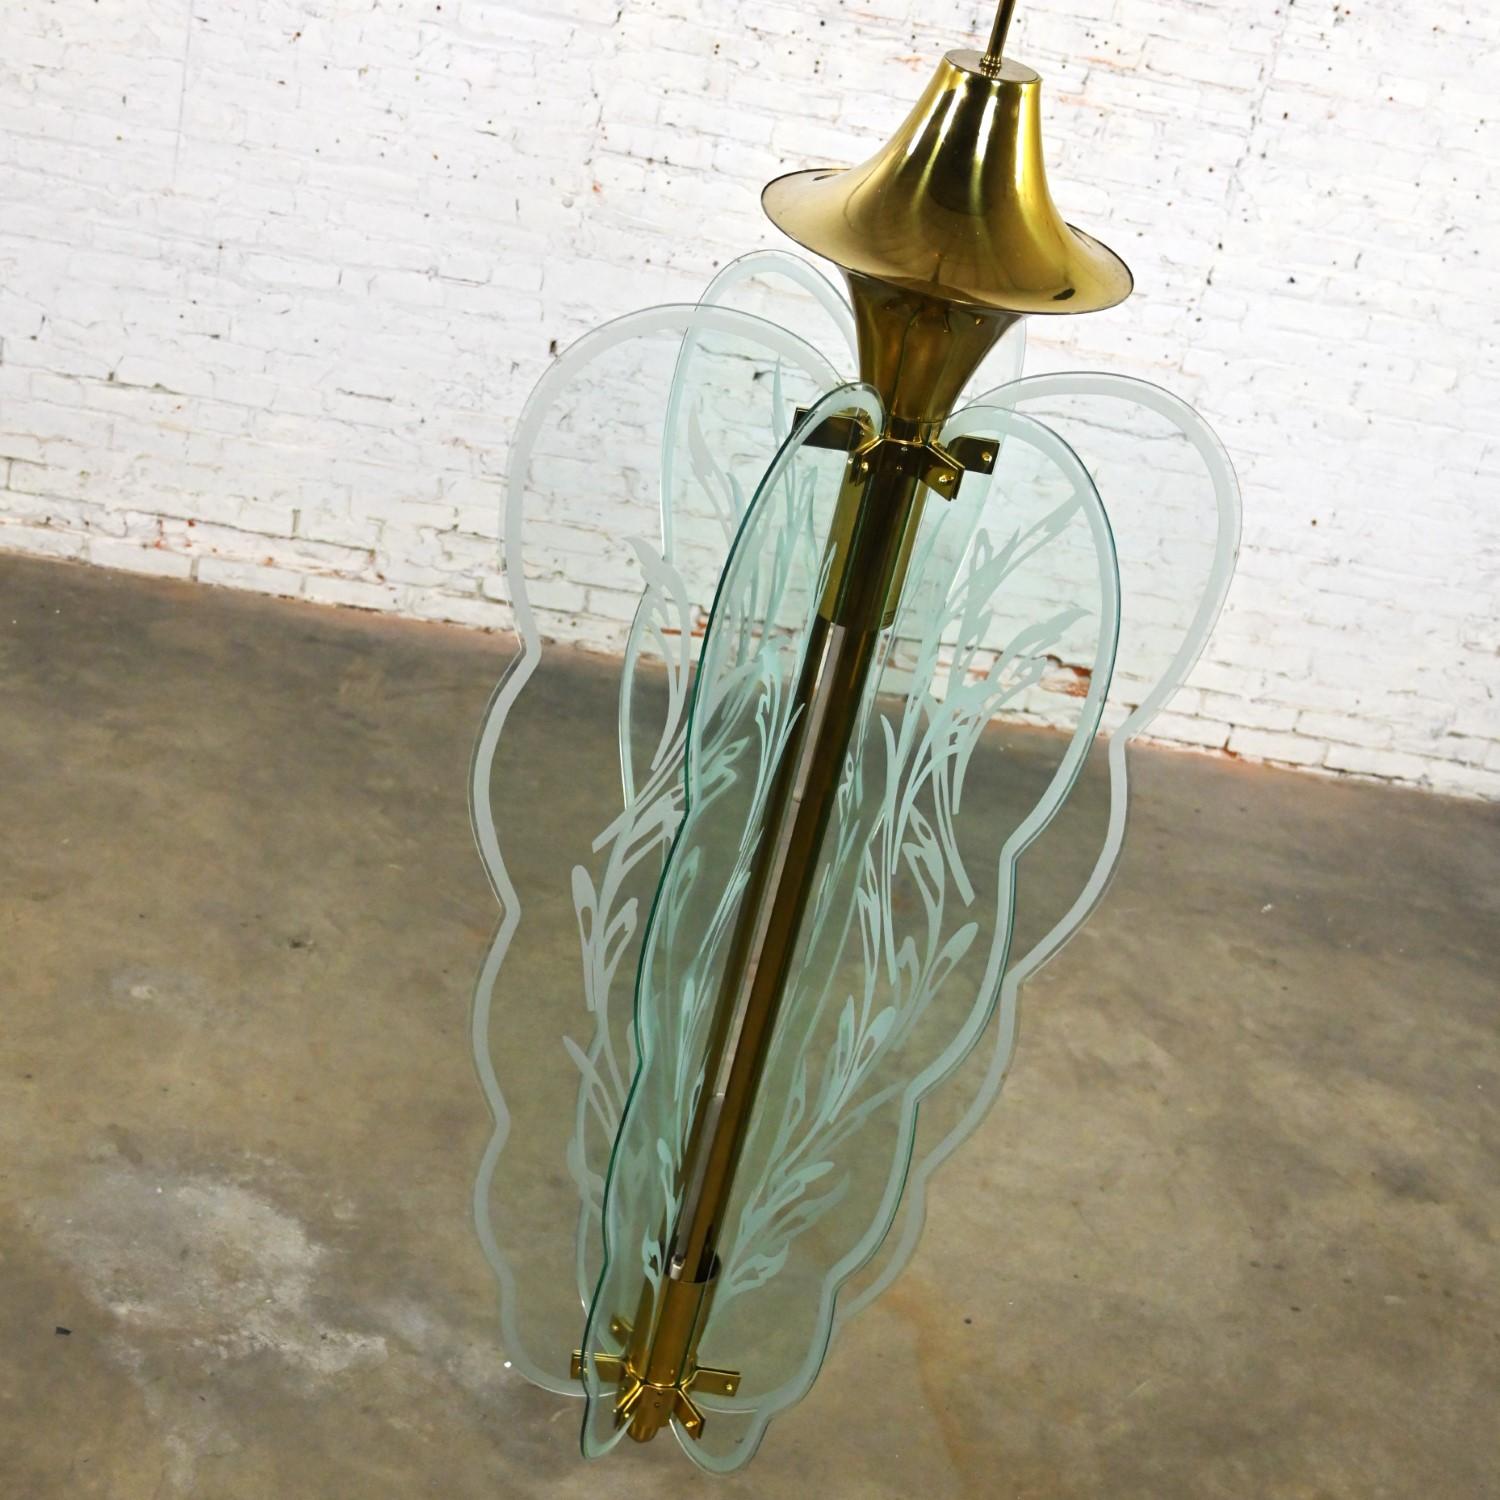 Art Deco Revival Monumental Brass Etched Glass Hanging Light Fixture Chandelier For Sale 2